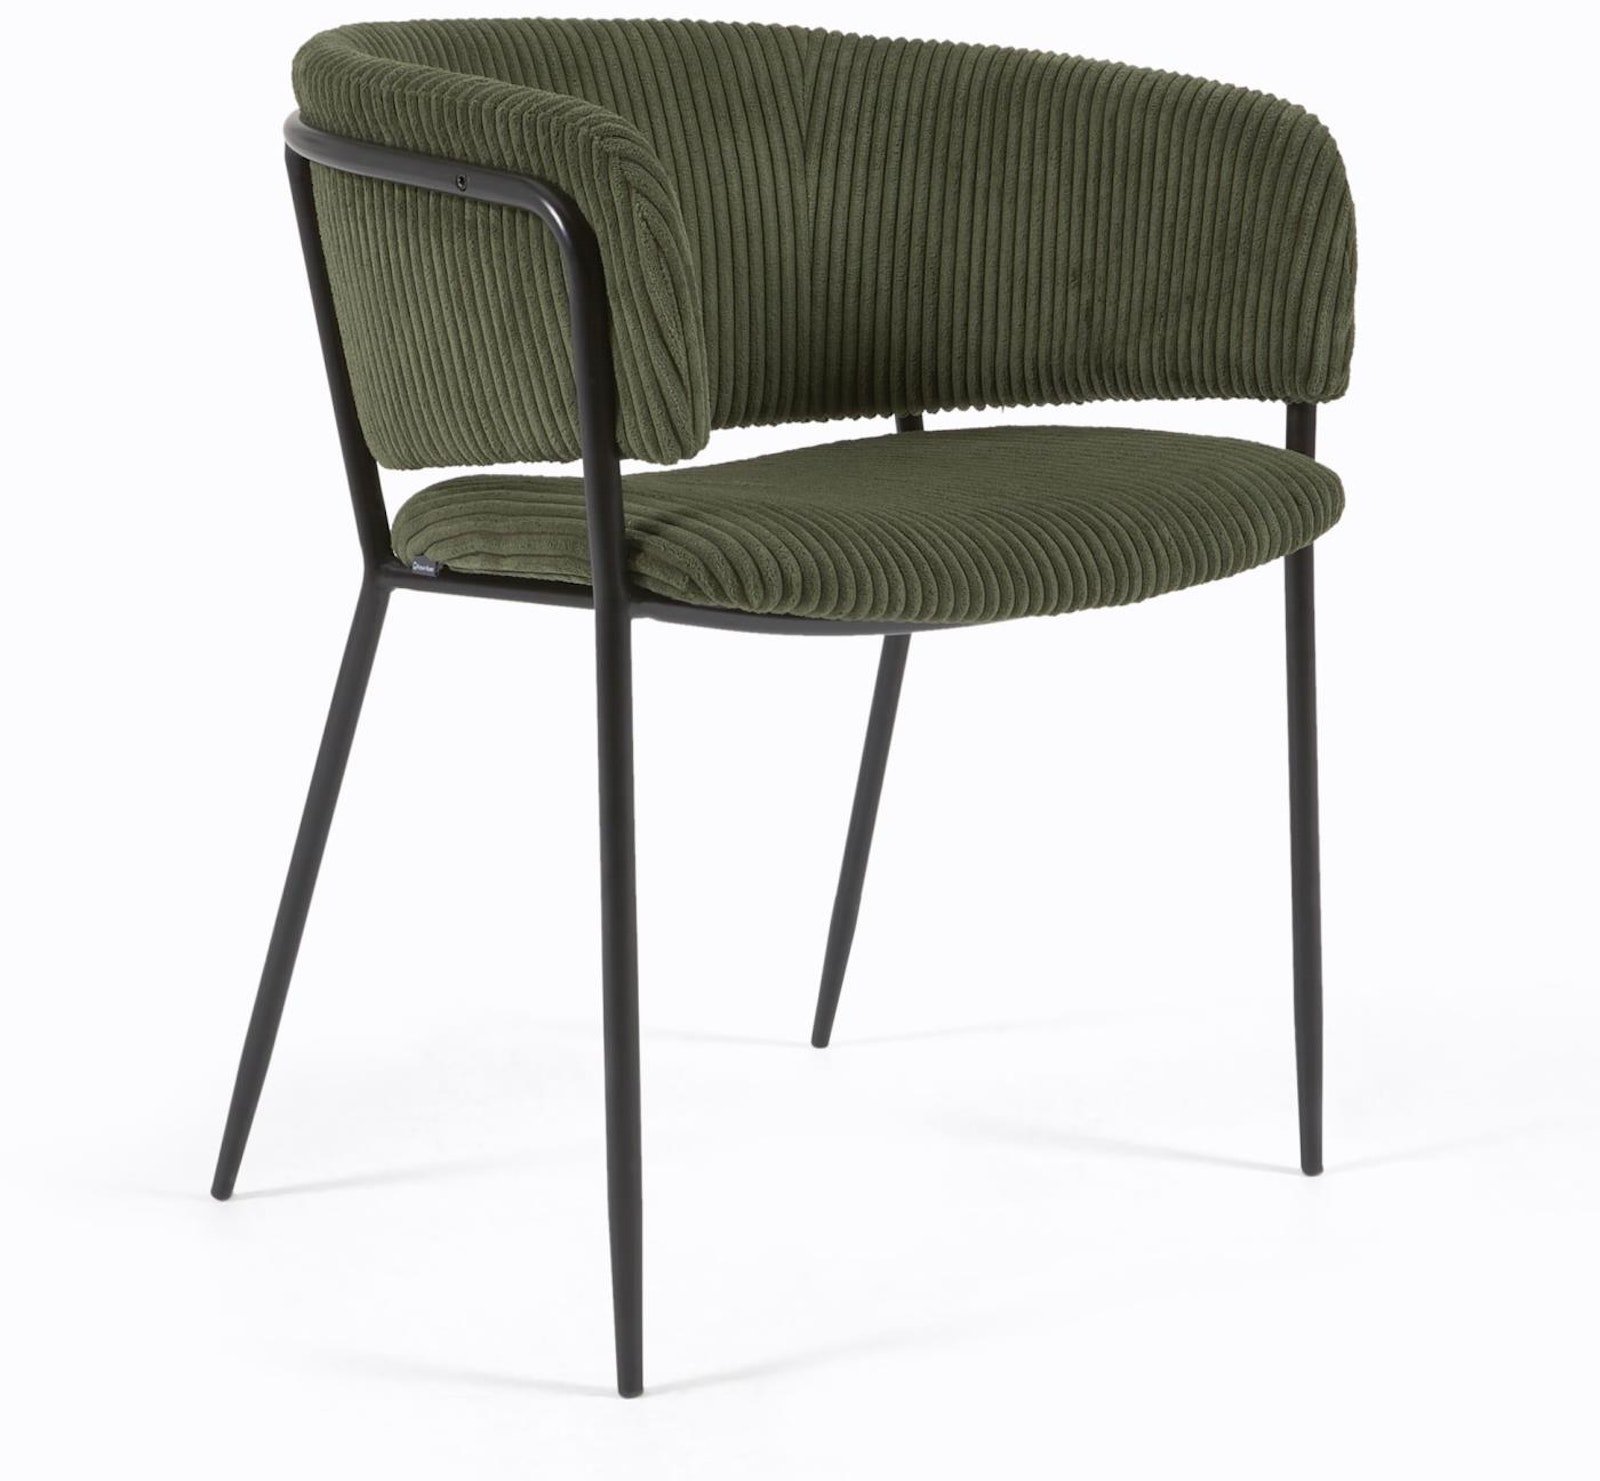 Runnie, Spisebordsstol, vintage, industriel, stof by LaForma (H: 73 cm. x B: 58 cm. x L: 58 cm., Grøn)